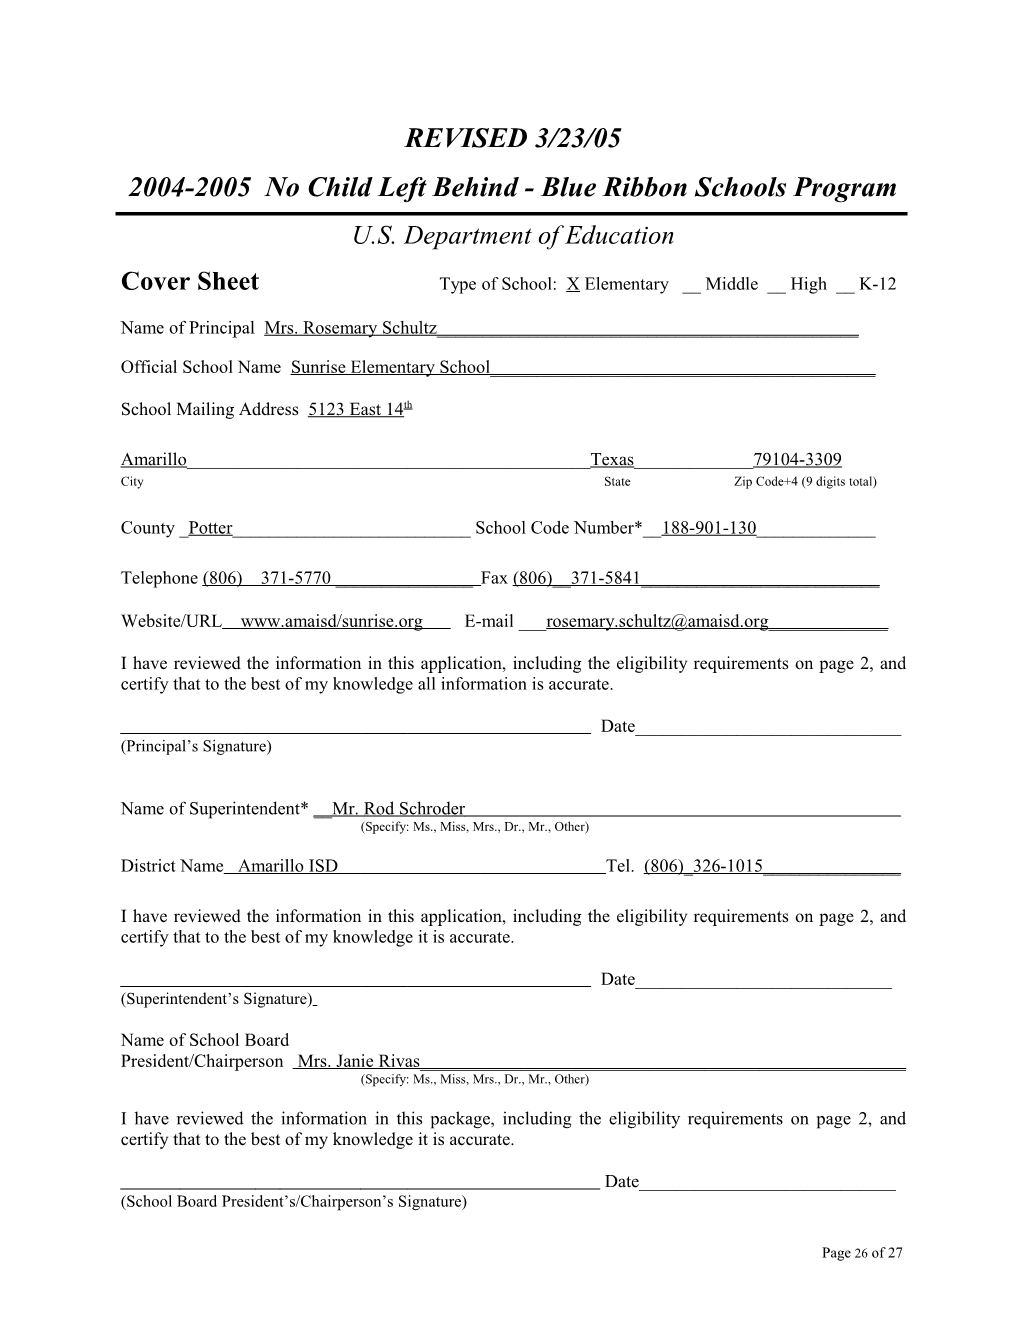 Sunrise Elementary School Application: 2004-2005, No Child Left Behind - Blue Ribbon Schools